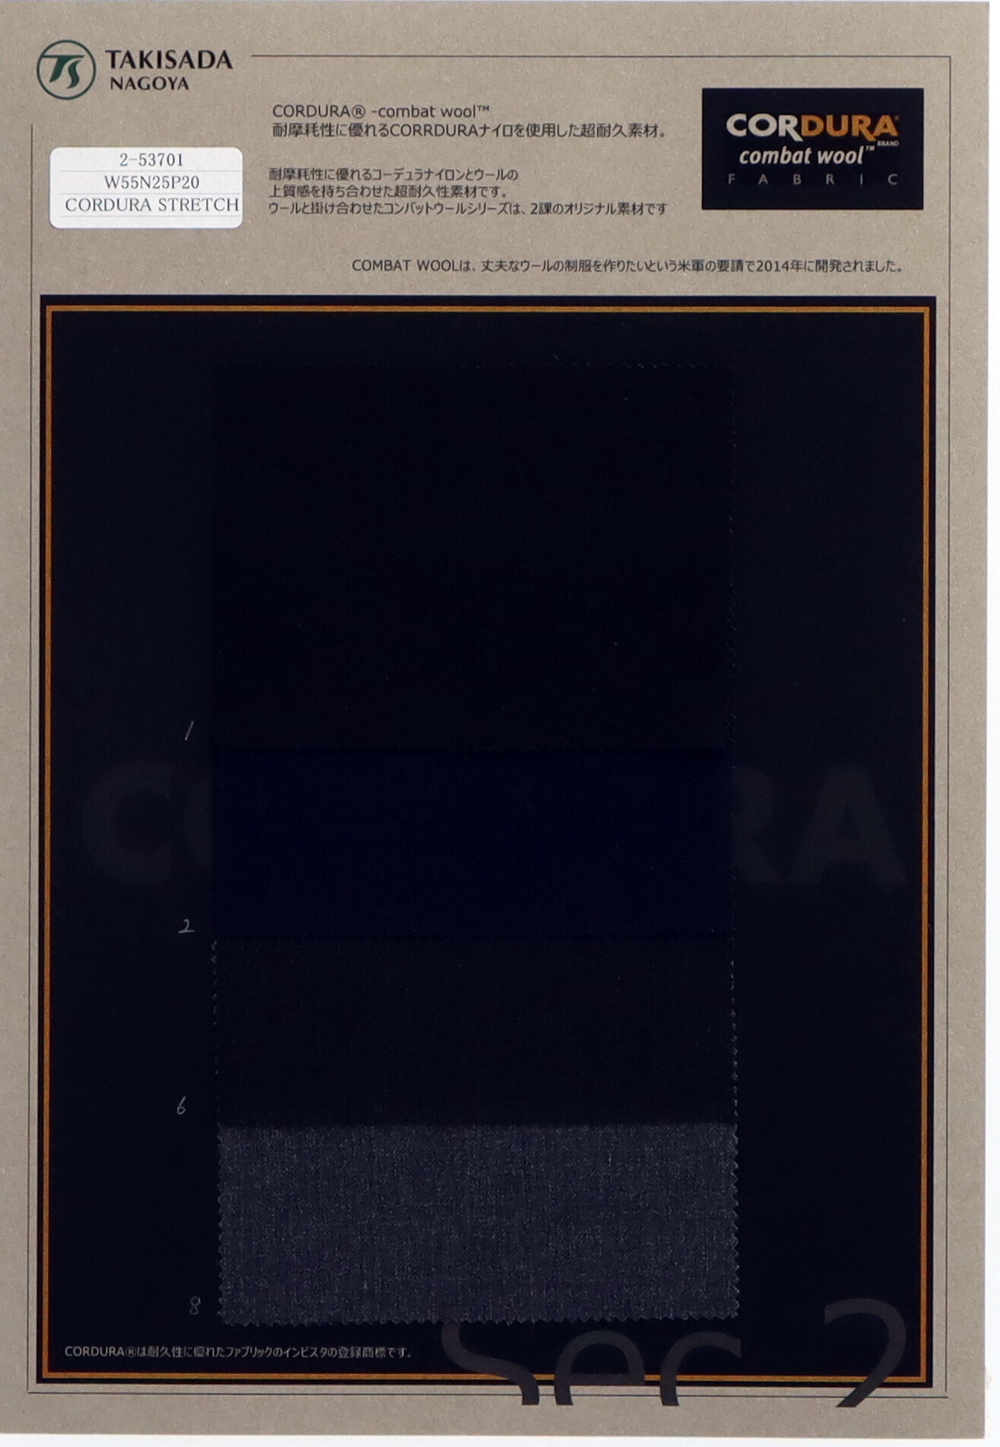 2-53701 Gabardine Stretch CORDURA COMBATWOOL[Fabrication De Textile] Takisada Nagoya